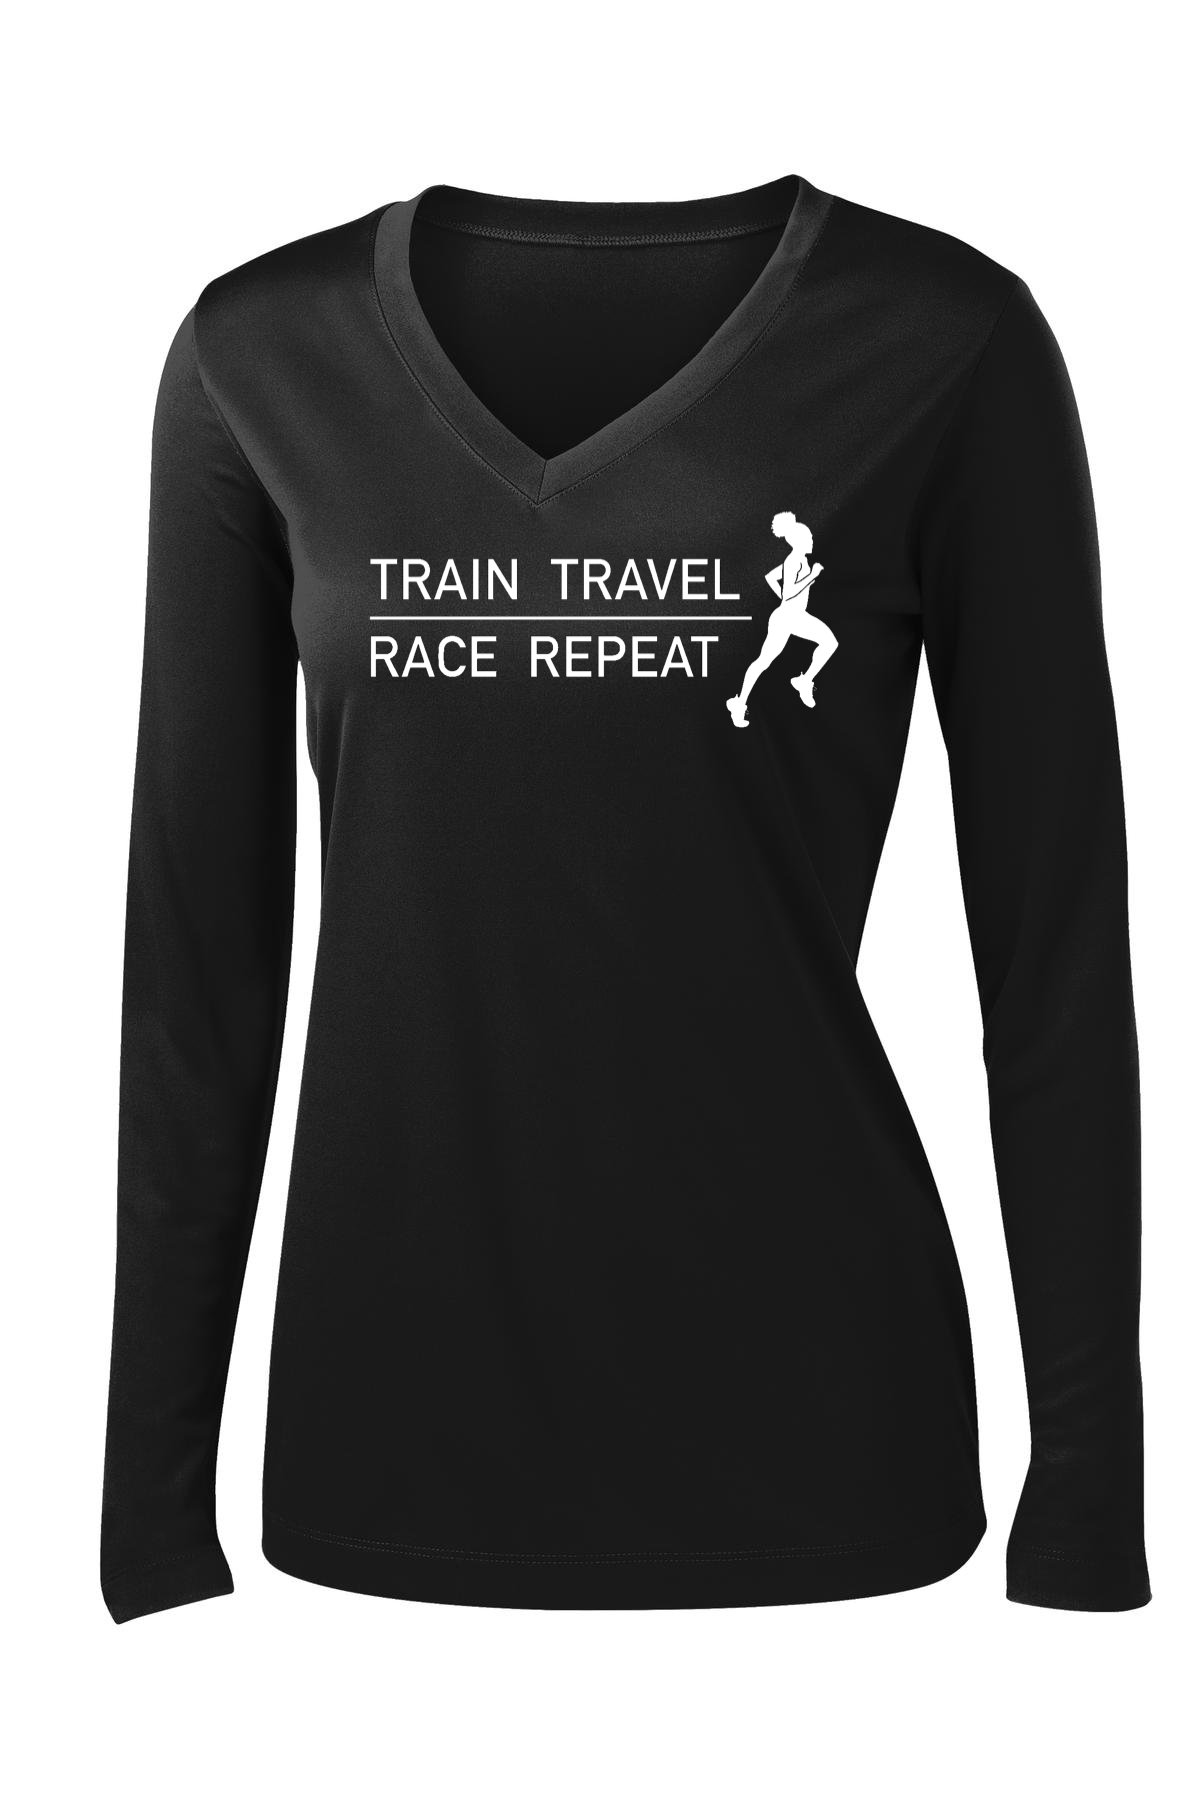 Train Travel Race Repeat Long Sleeve T-shirt